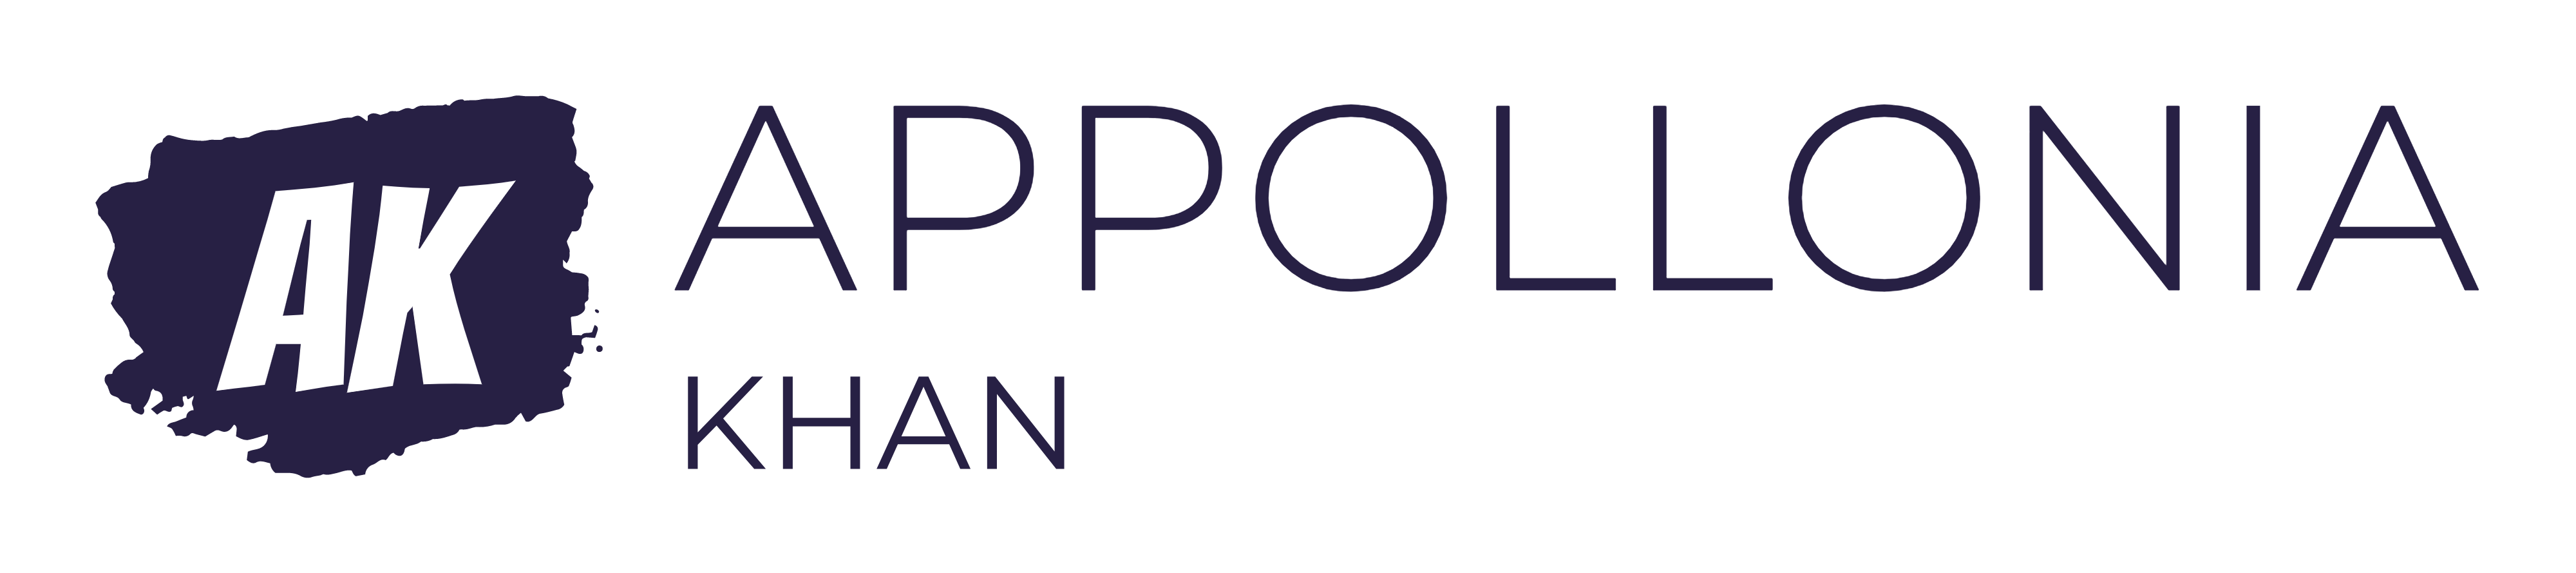 Appollonia Logo